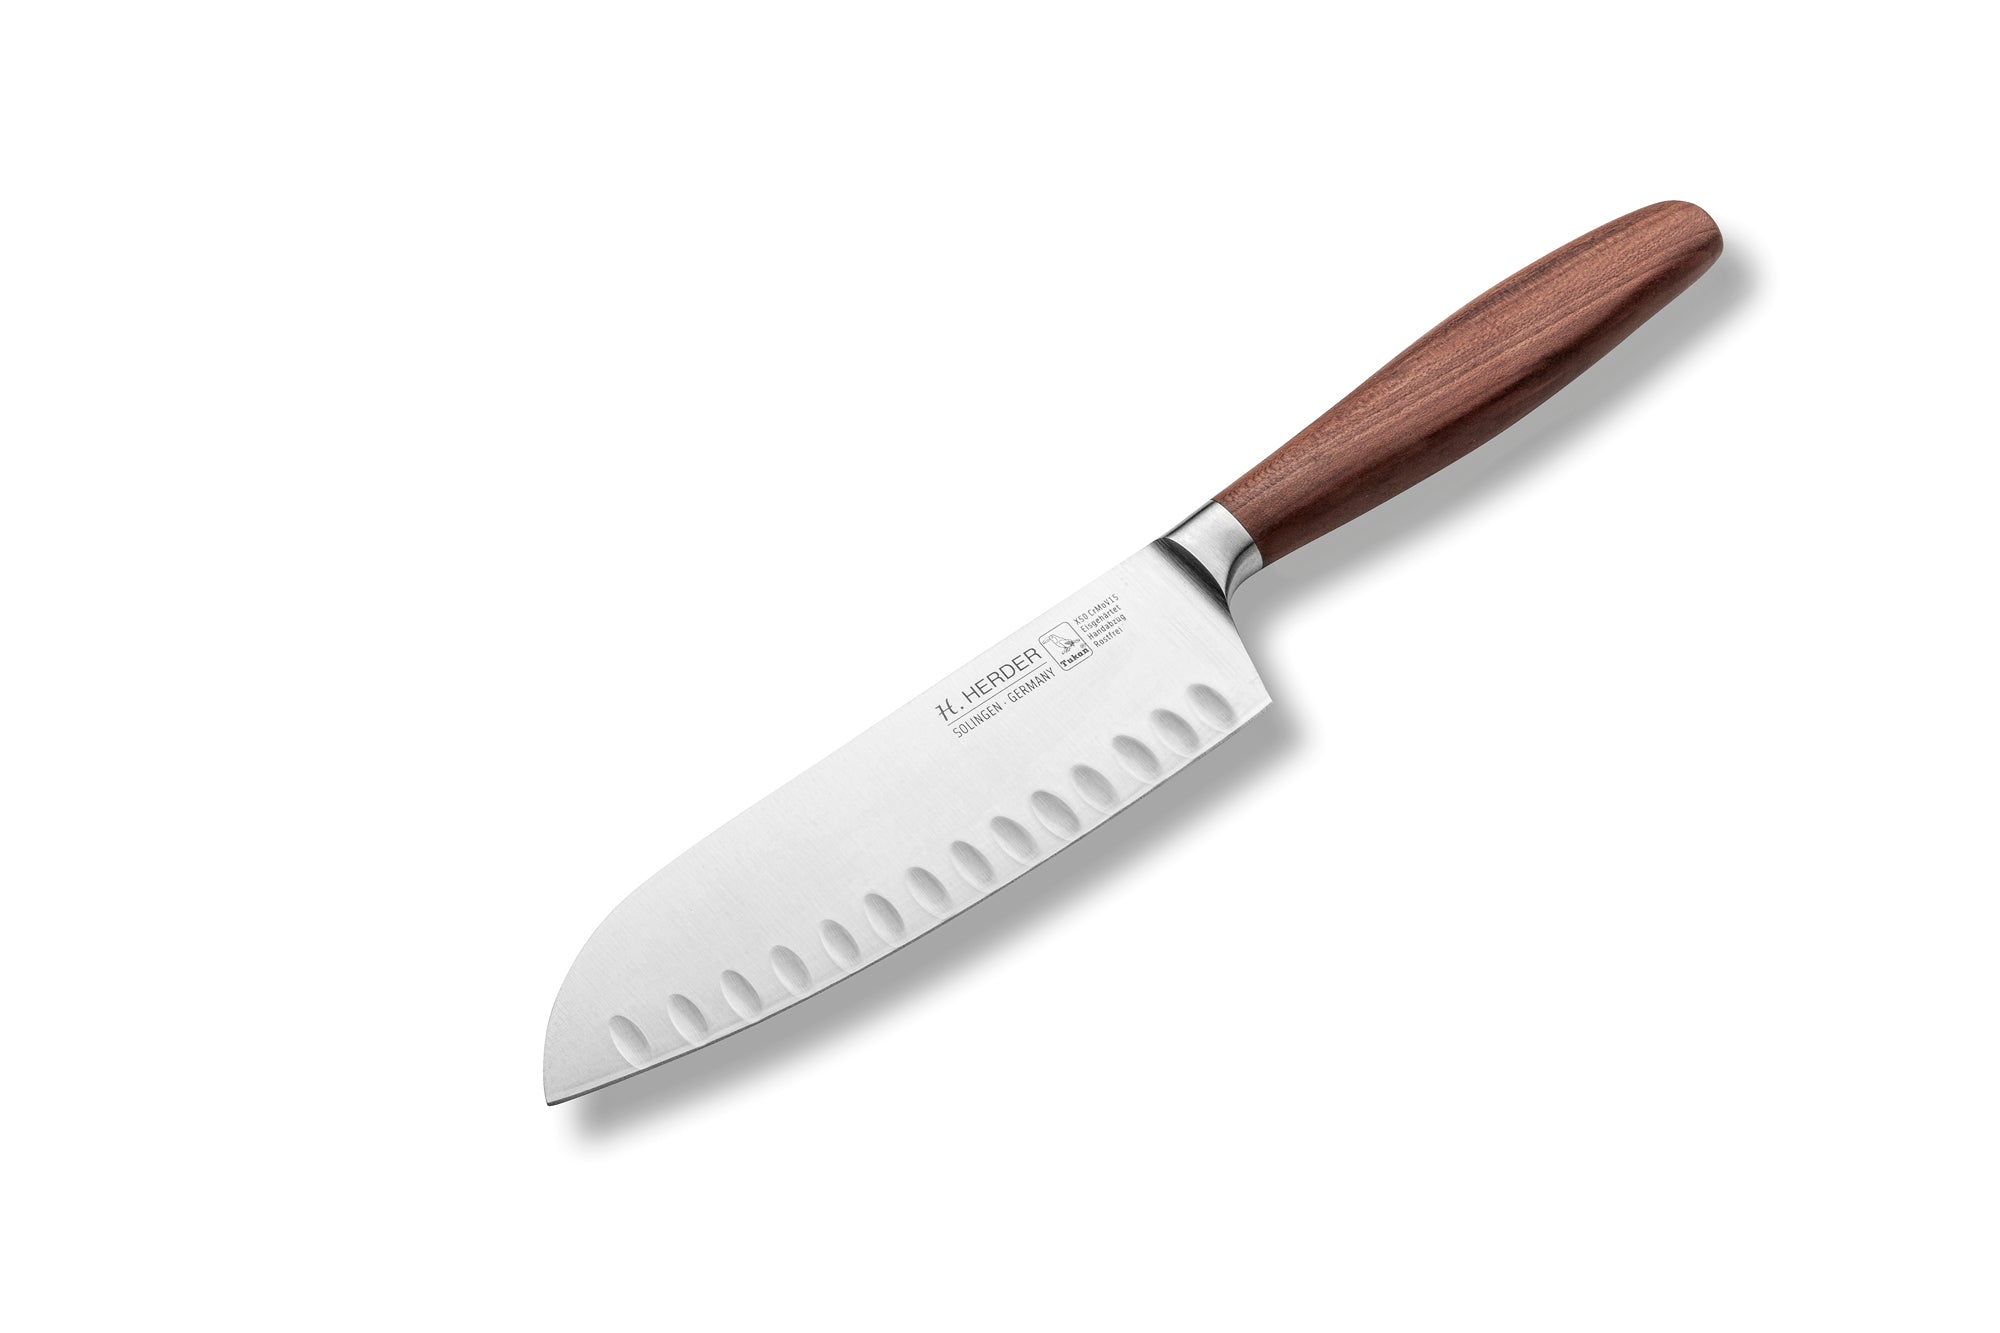 Santoku knife Eterno, plum wood, blade length 16cm, forged, fluted edge